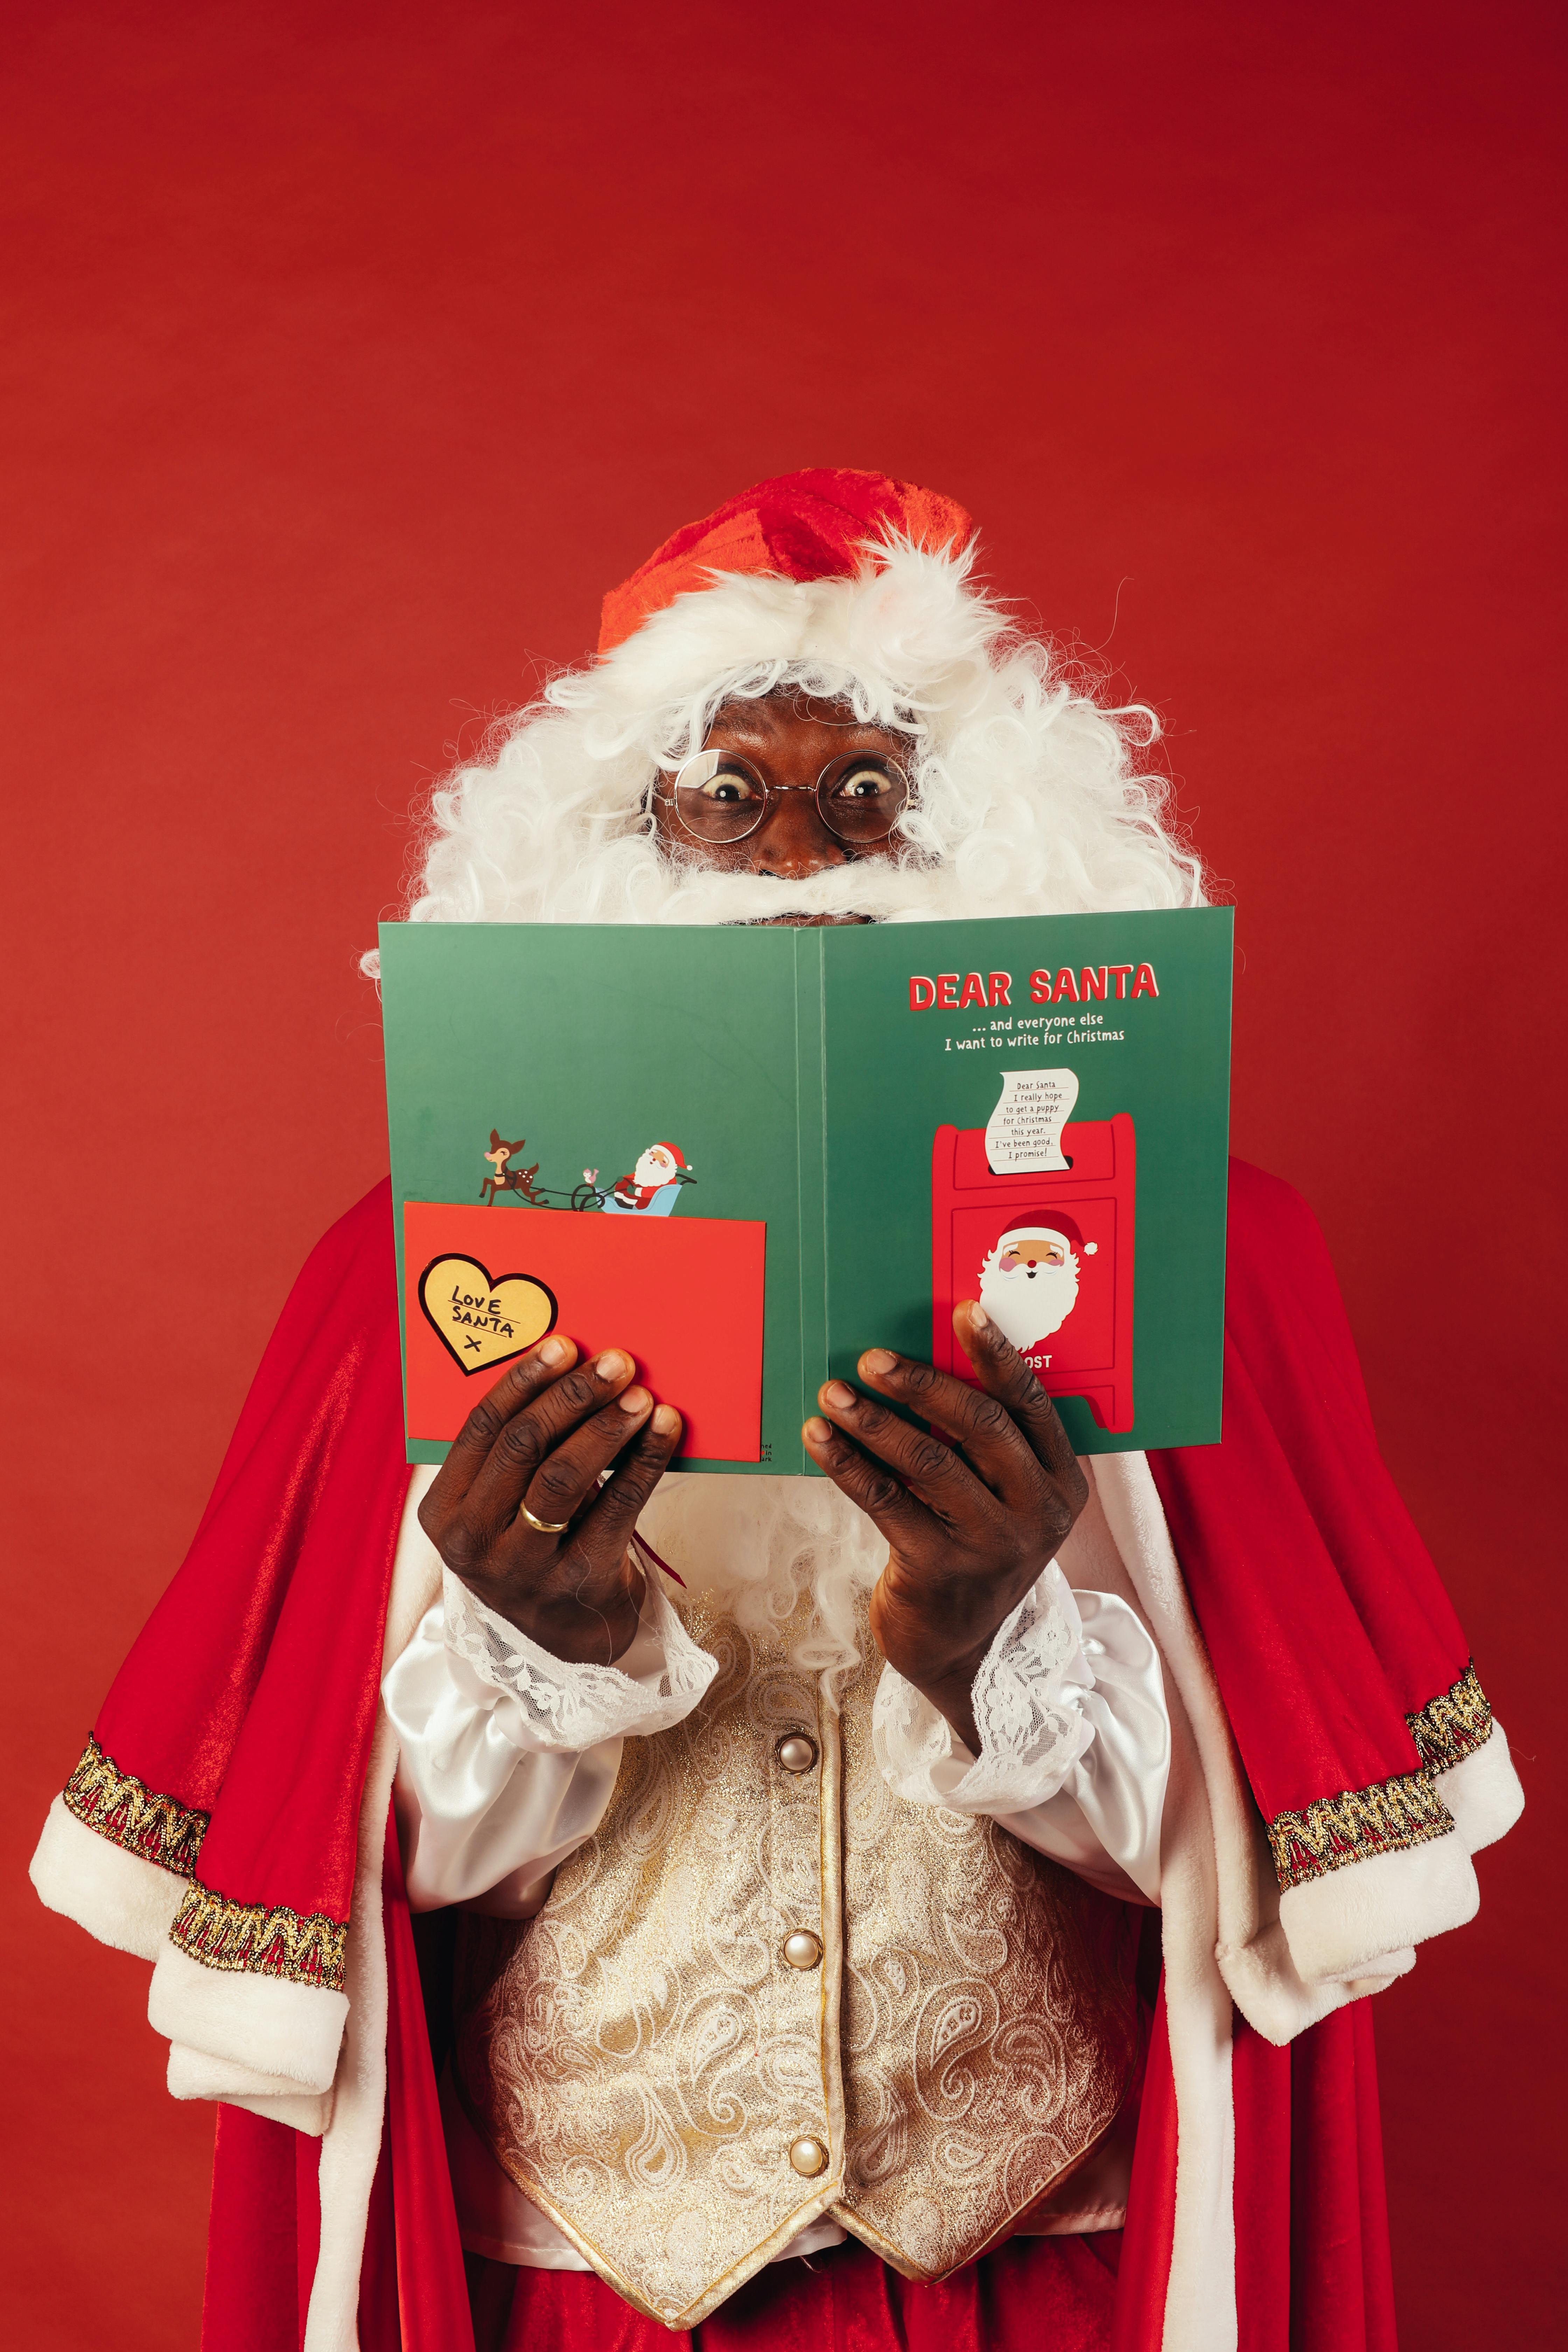 A Christmas card covering Santa Claus' face. | Photo: Pexels